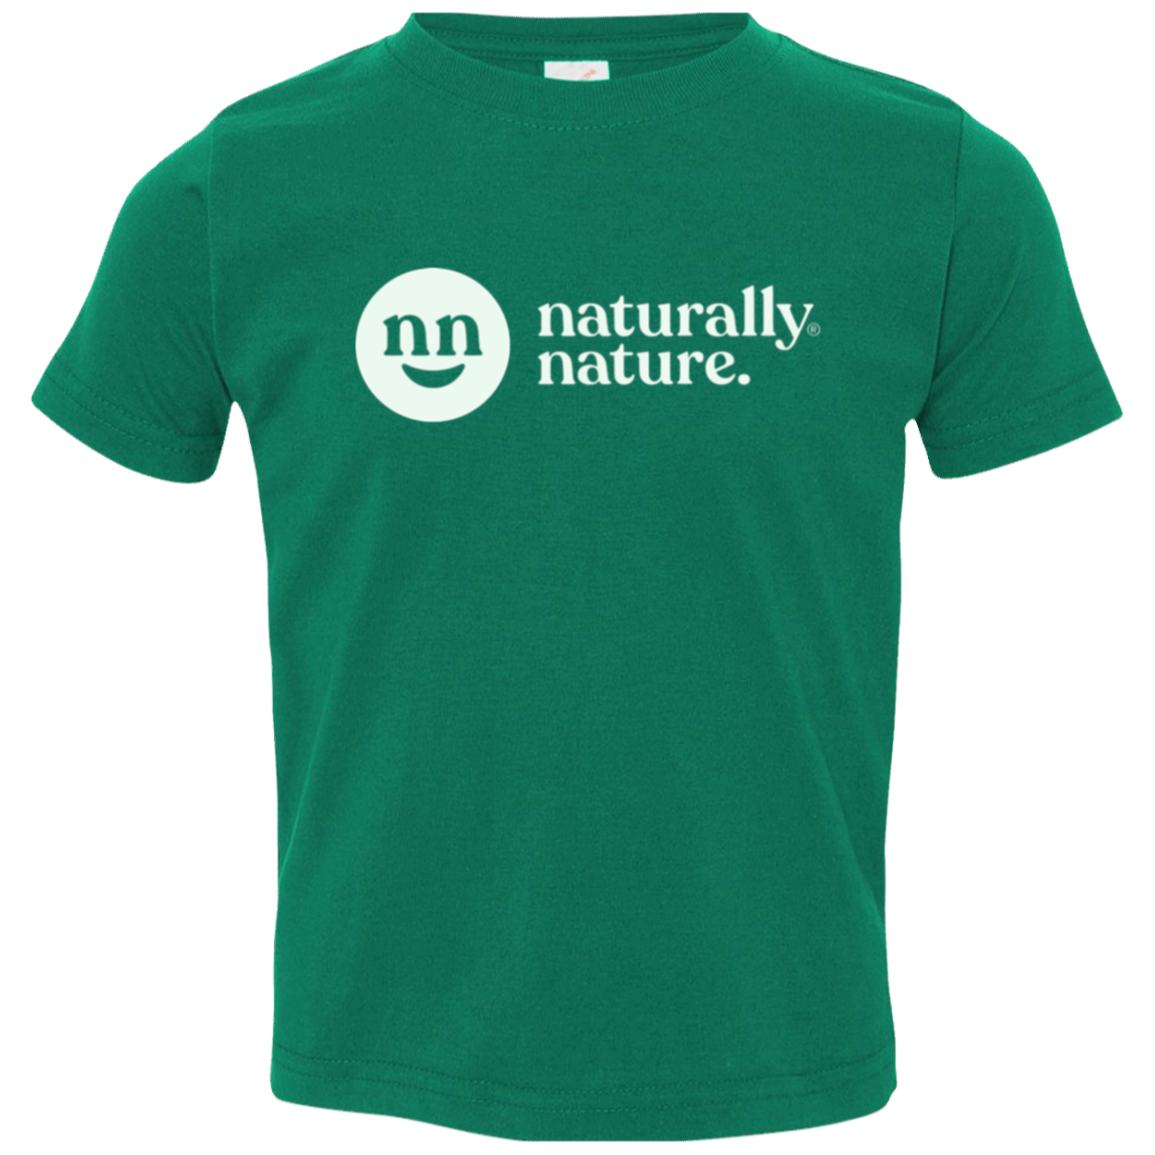 Naturally Nature Cotton Toddler 2T-5T, Kelly Green LAT Rabbit Skins Premium Jersey